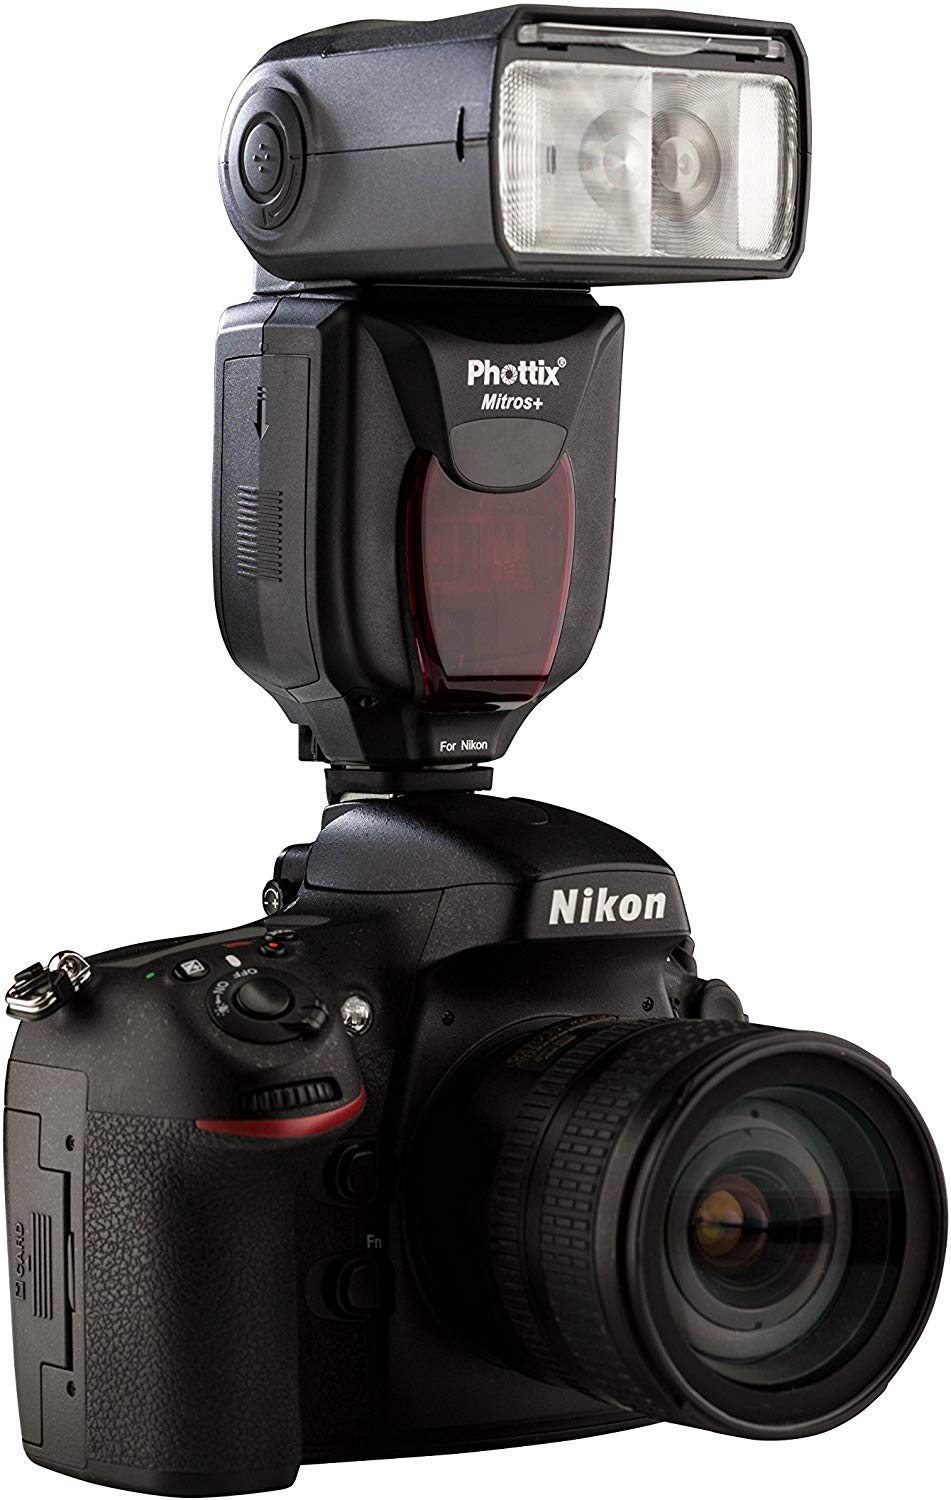 Phottix Mitros+ TTL Transceiver Flash Speedlight For Nikon